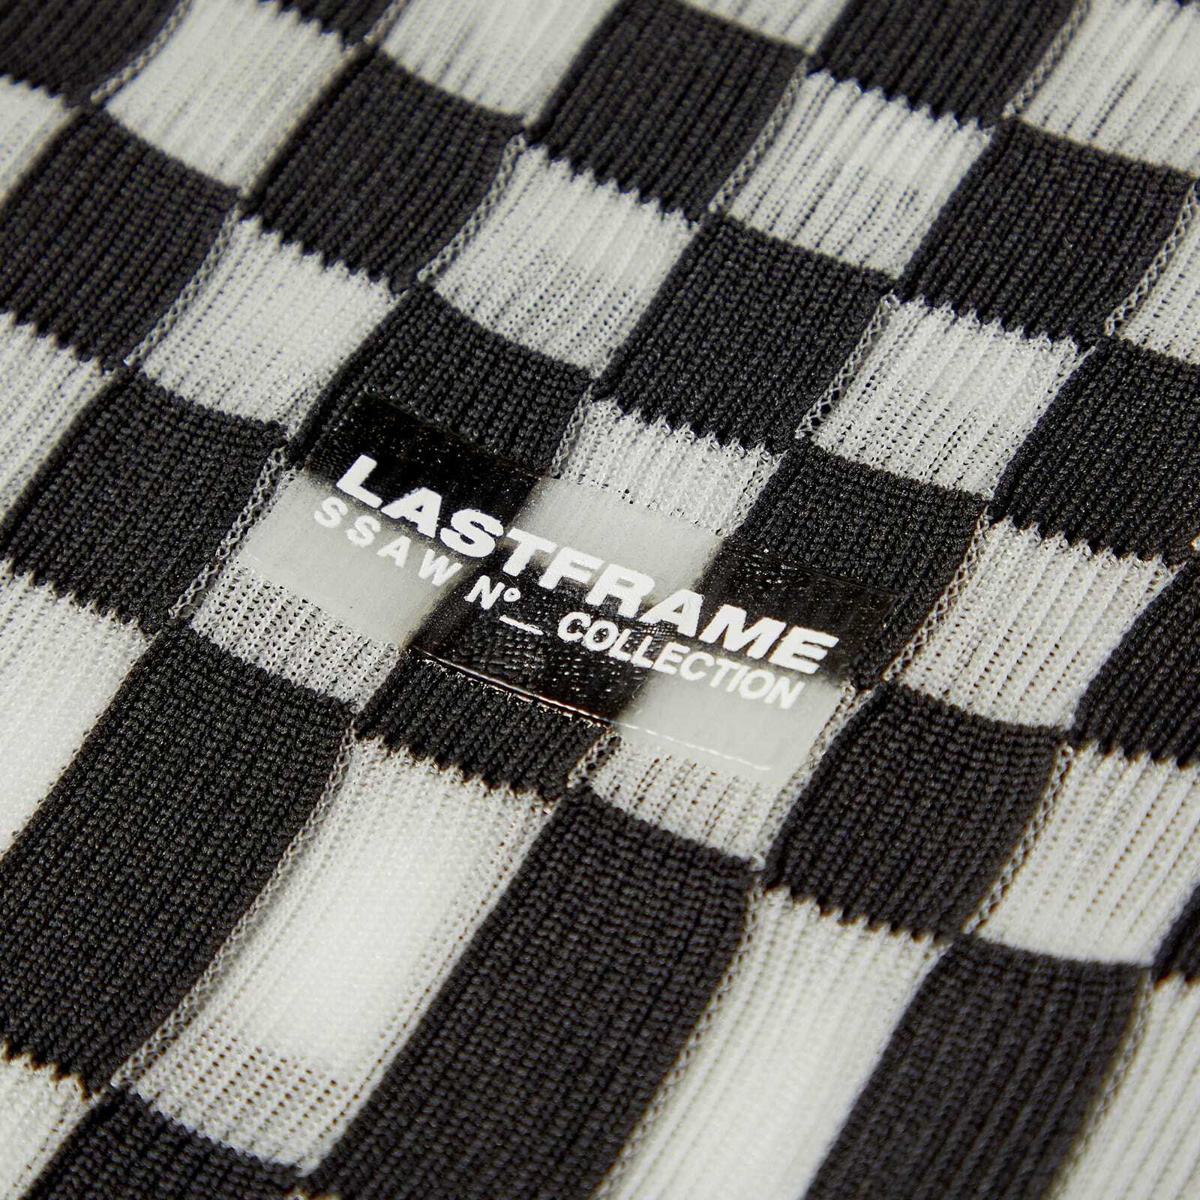 LASTFRAME Women's Sheer Ichimatsu Market Bag Medium in Black/Clear